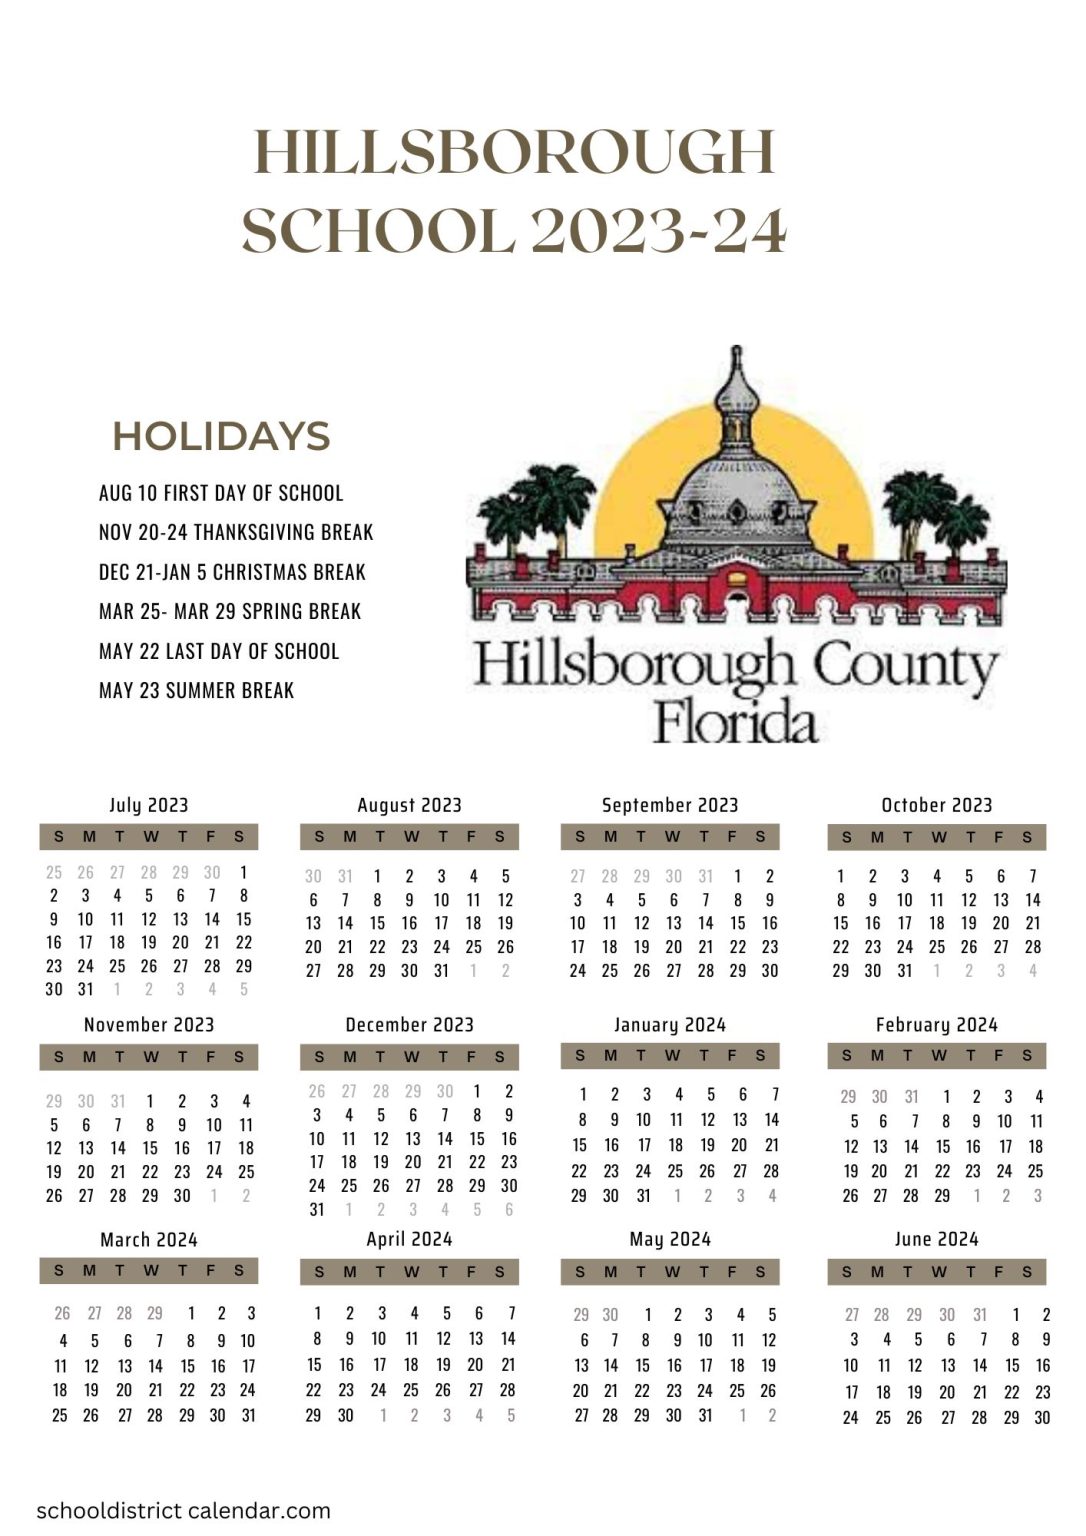 Hillsborough County School District Calendar Holidays 20232024